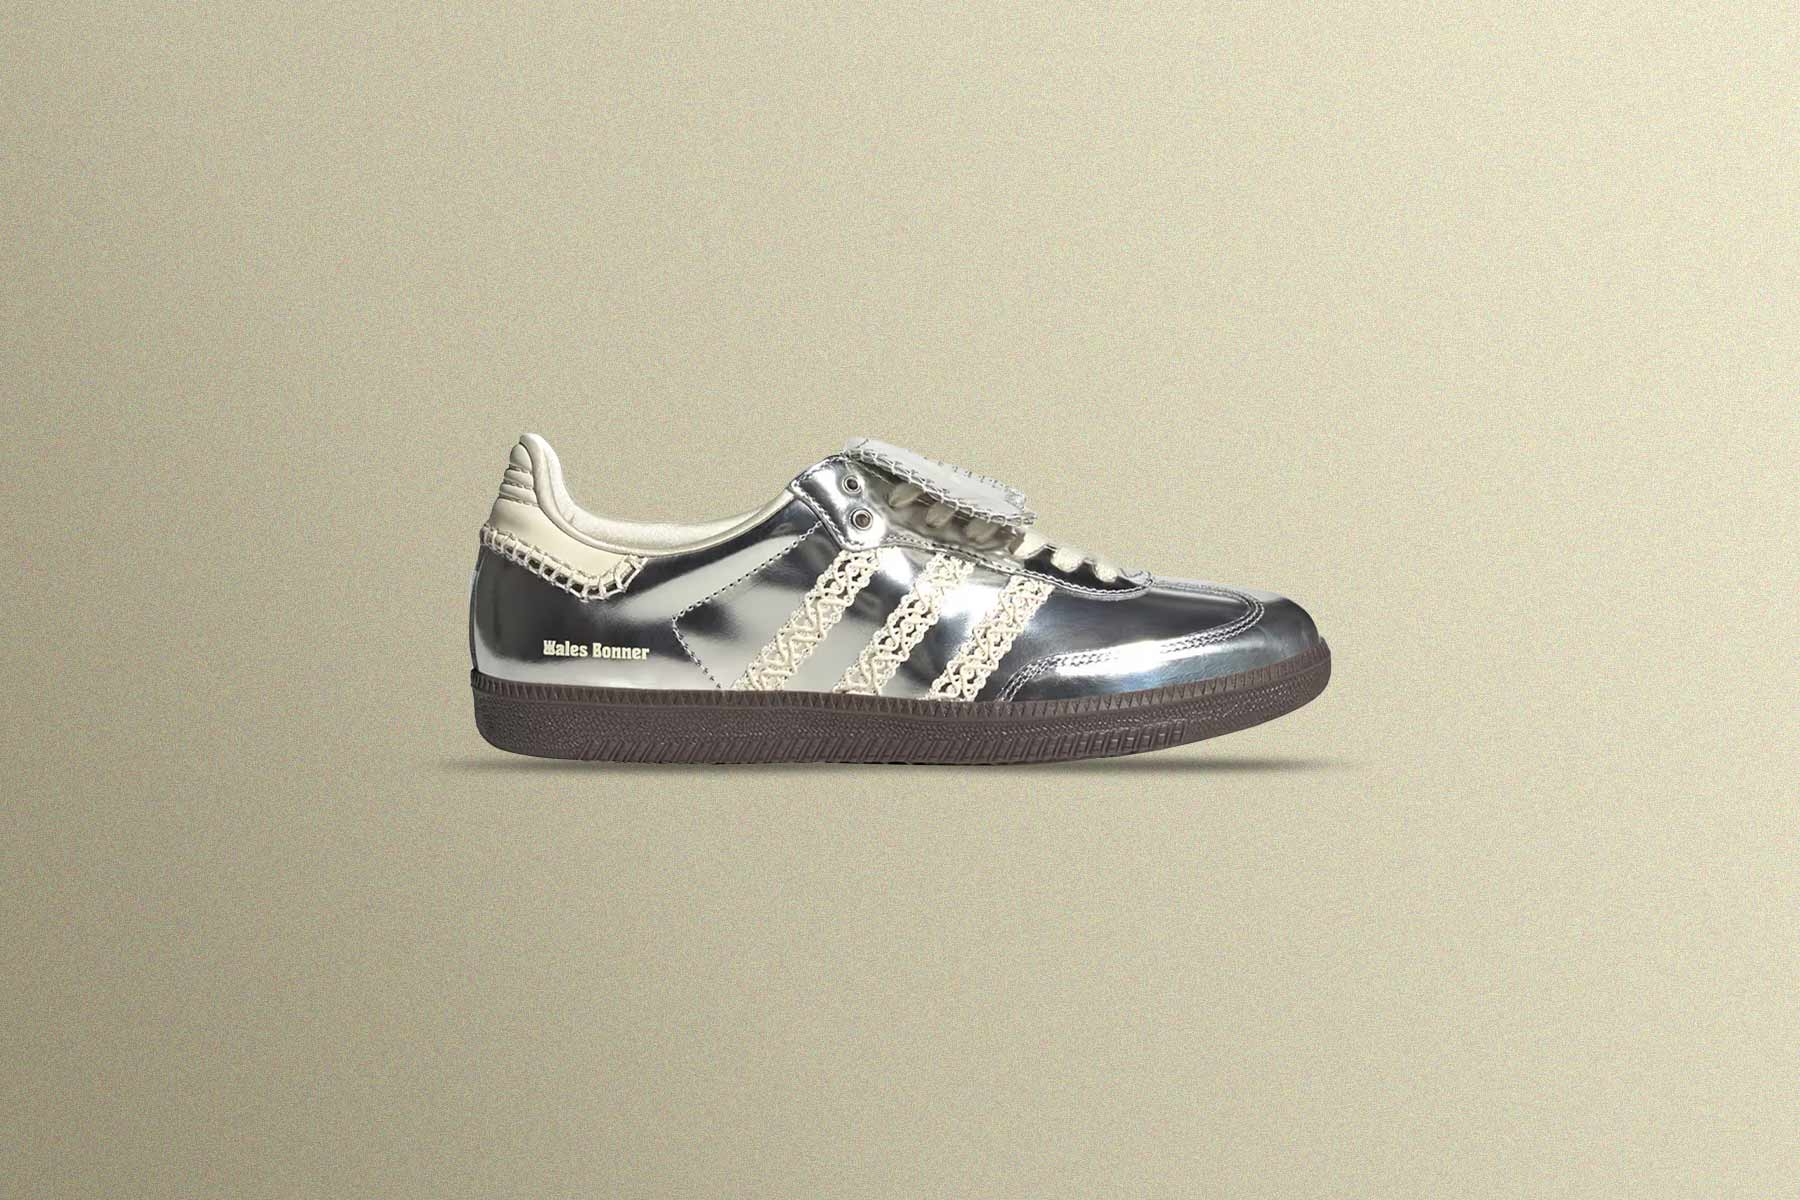 Adidas Originals x Wales Bonner Samba Silver - Silver/White, , large image number null